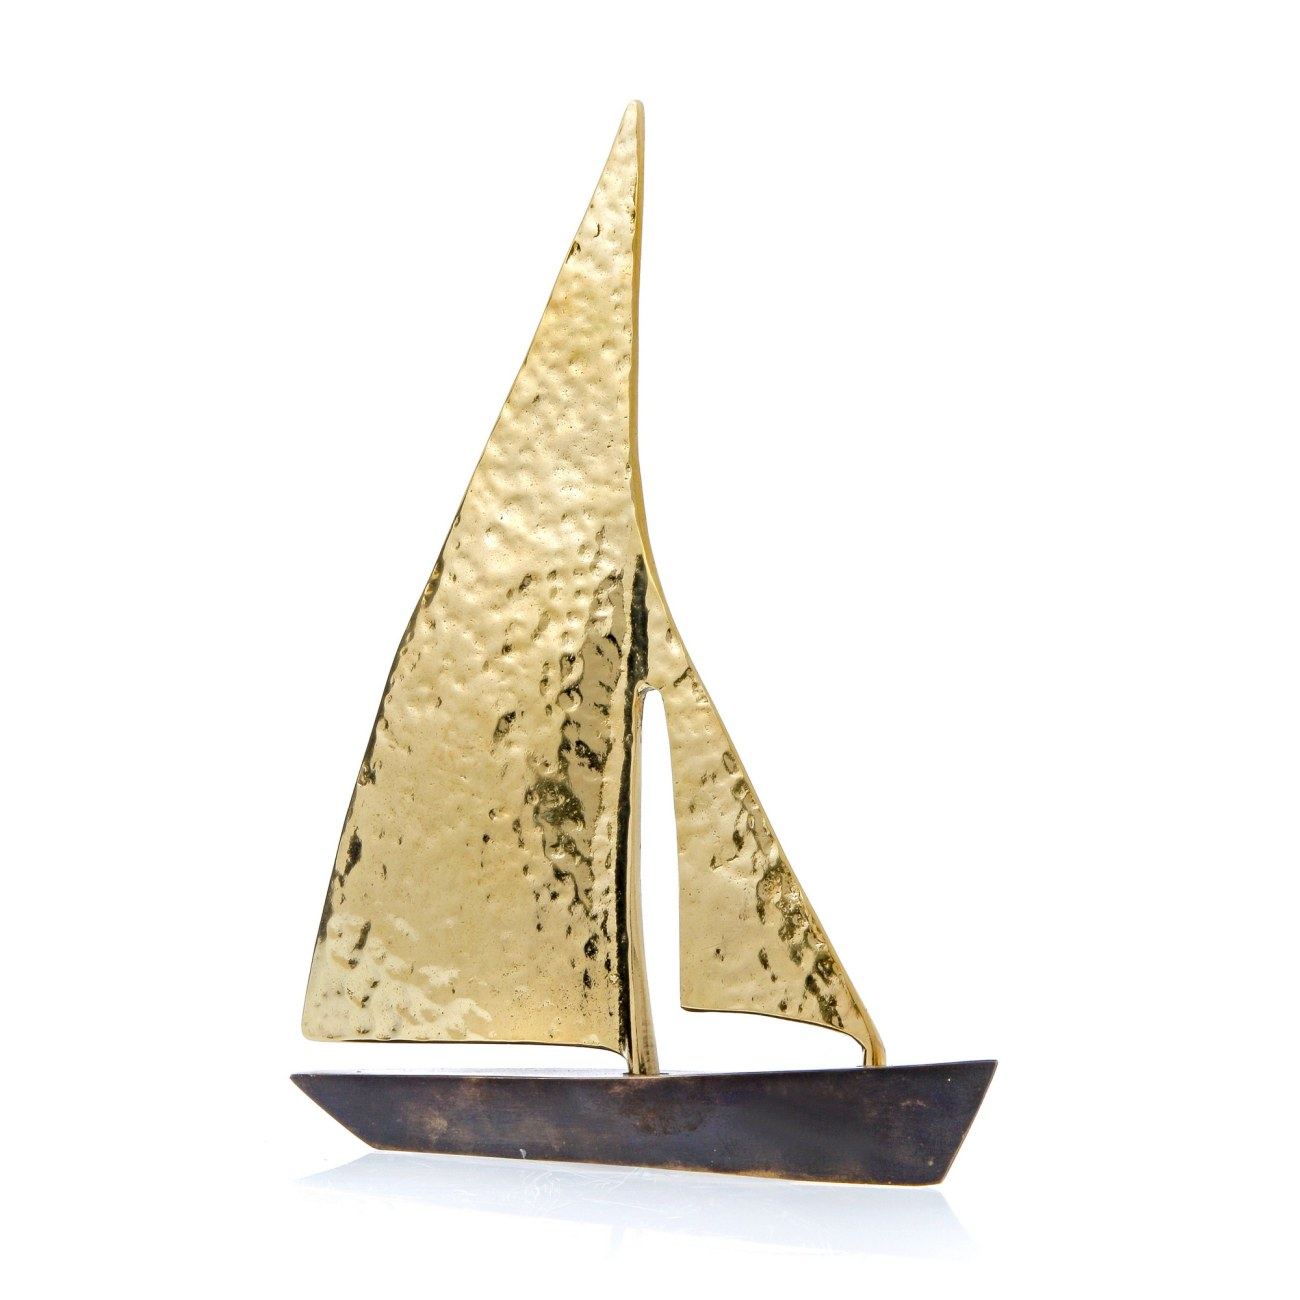 https://www.elitecrafters.com/image/cache/data/uploads/products/Metal_Sailing_Boat_Ship_Handmade_Nautical_Decorative_Theme_Bronze_Oxidized_Hull_Large_1-1300x1300.jpg